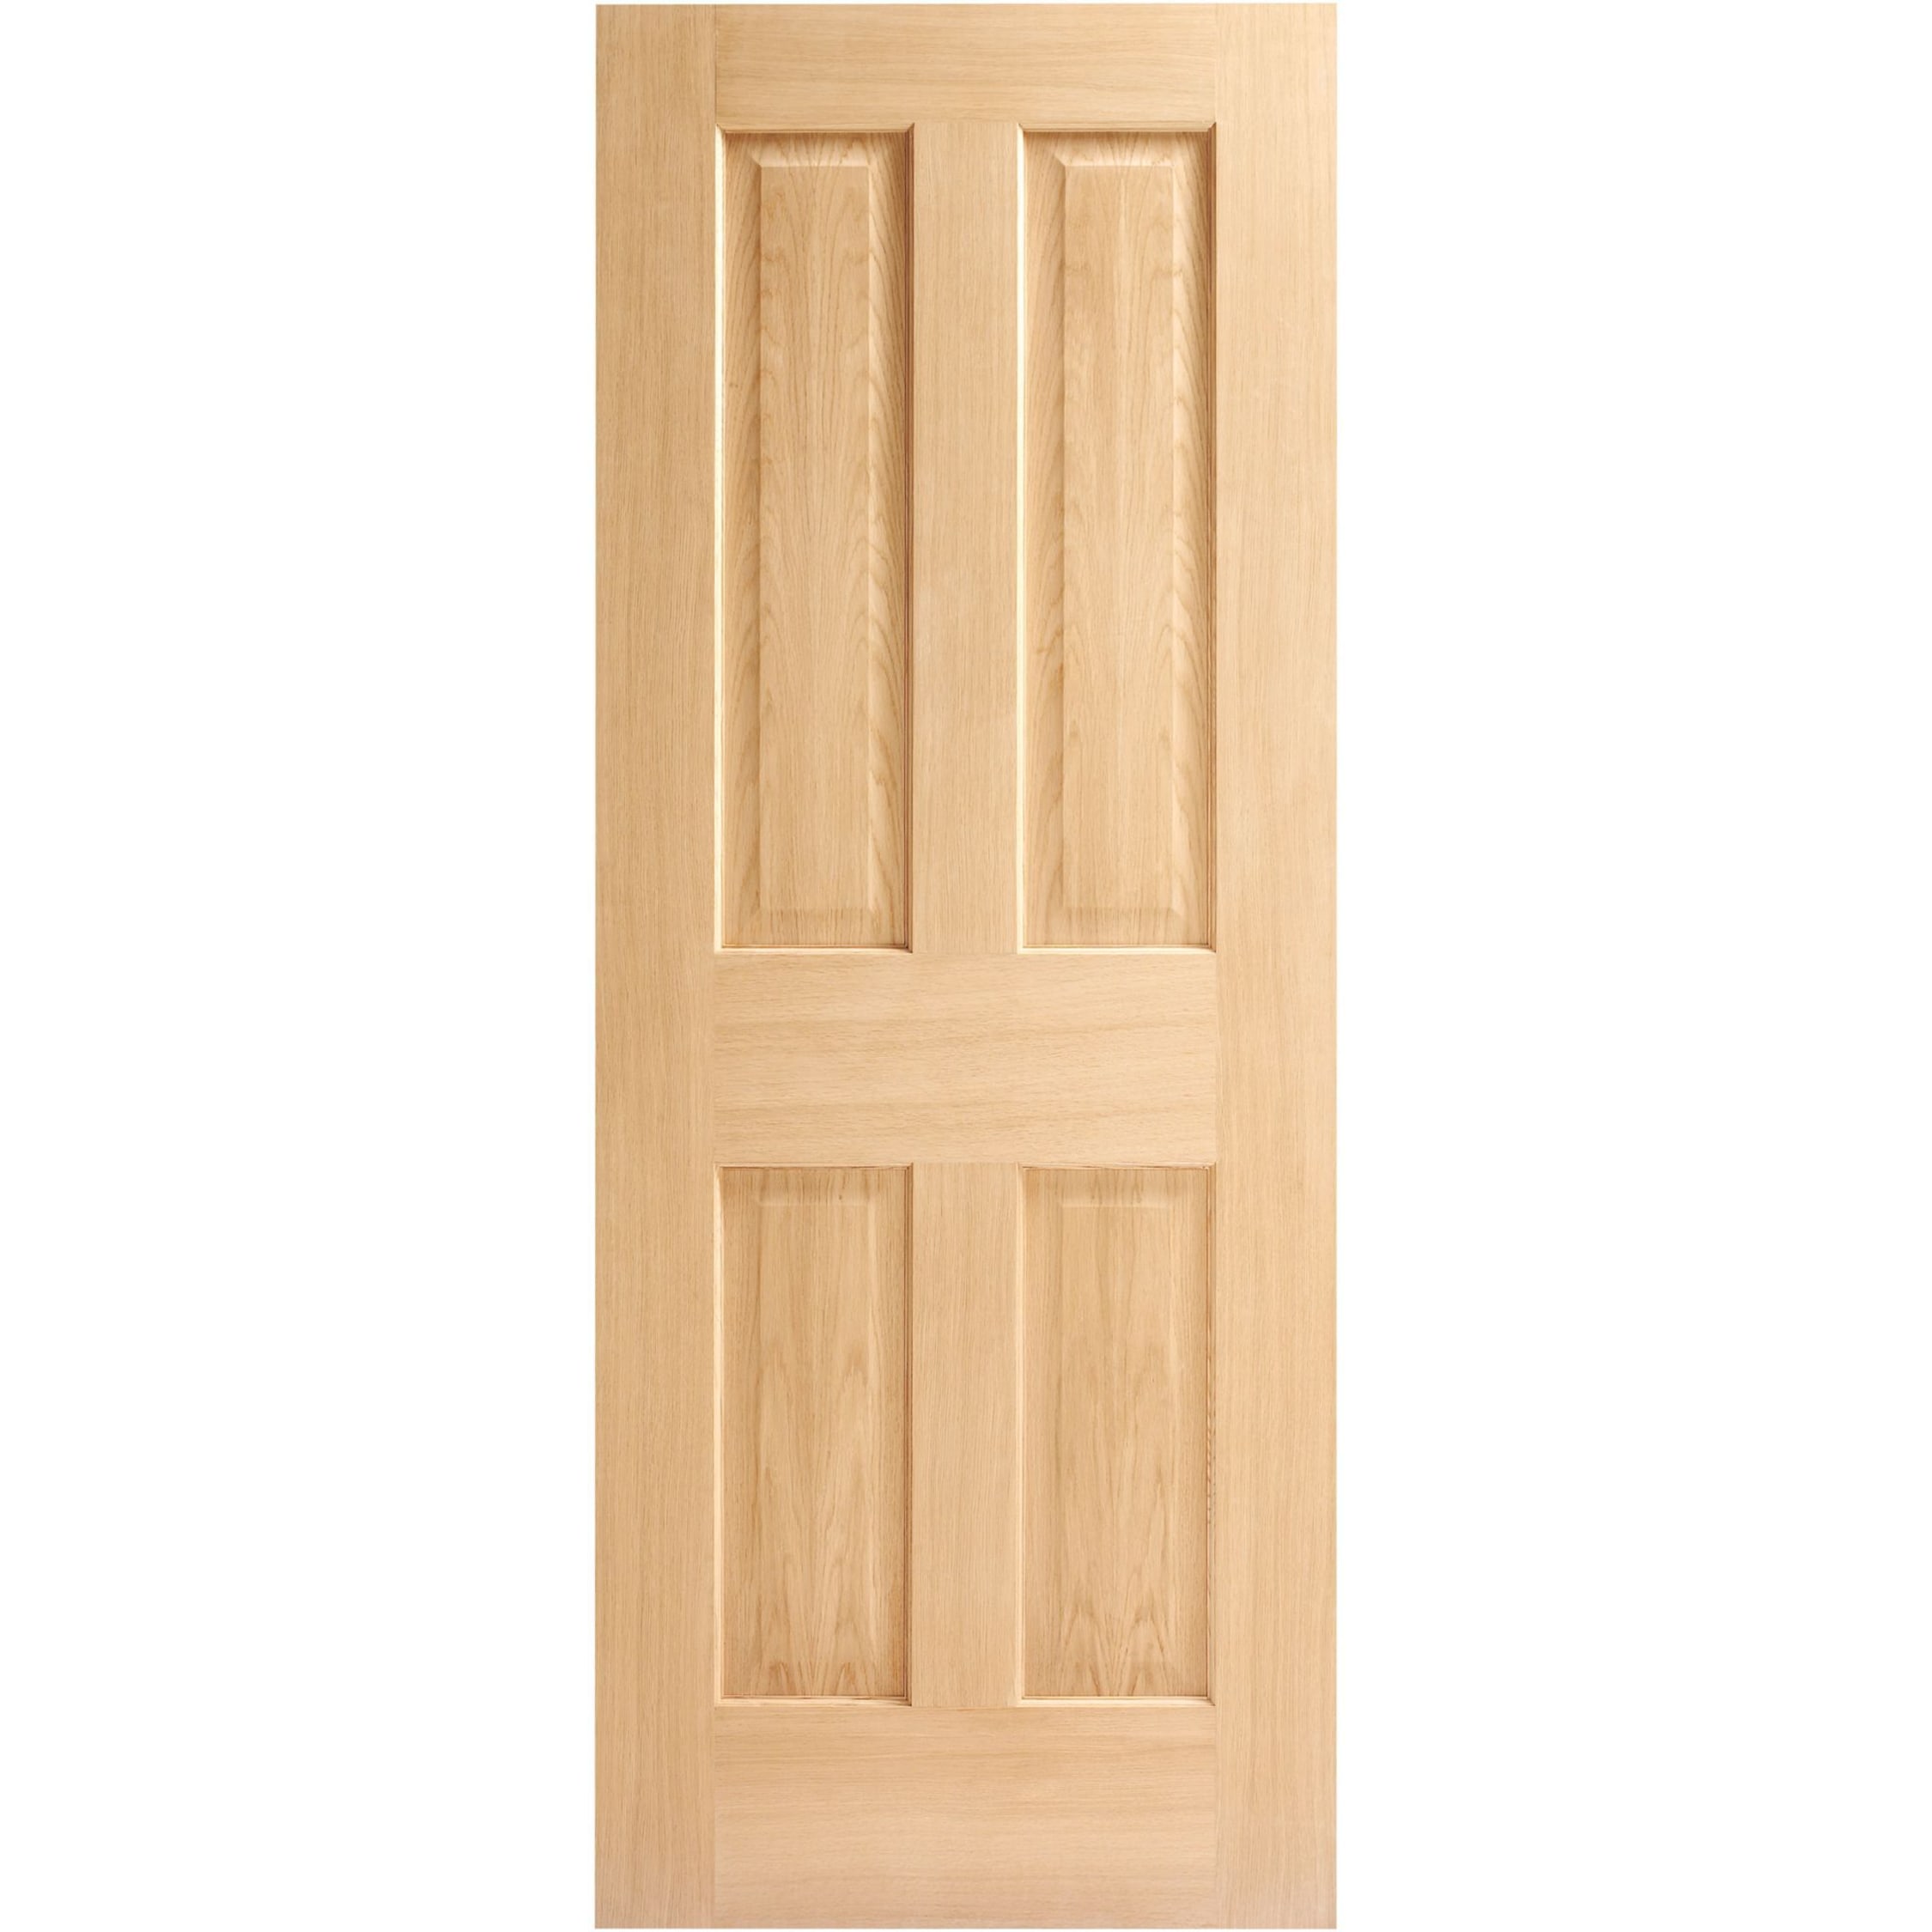 Oak Veneer 4 Panel Internal Doors